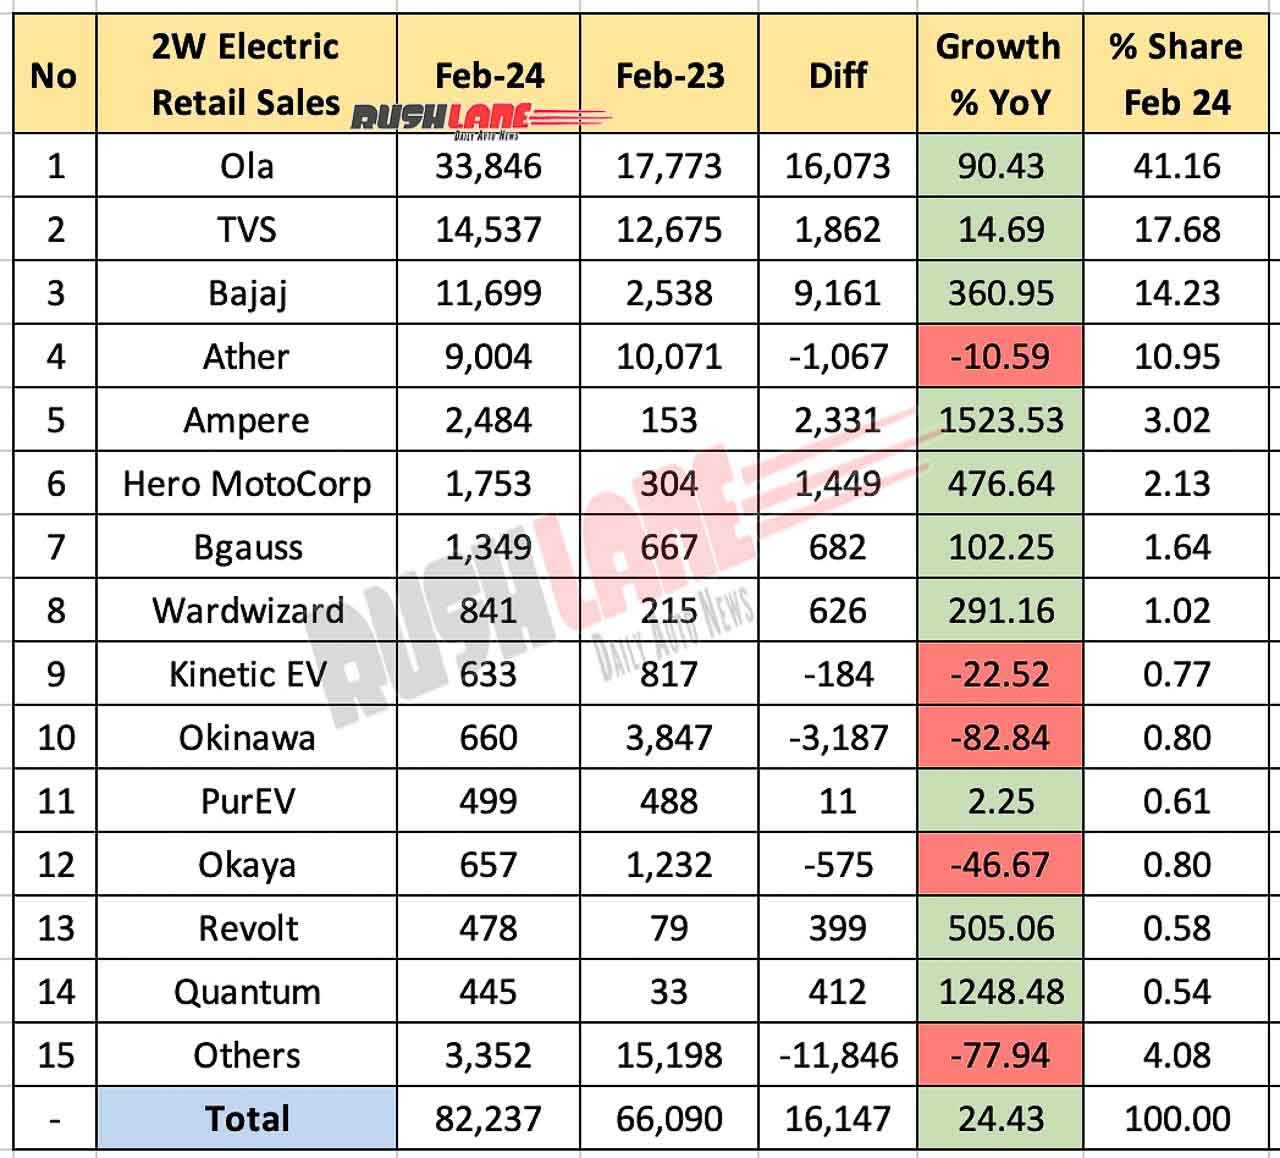 Electric 2W Sales Feb 2024 vs Feb 2023 - YoY comparison